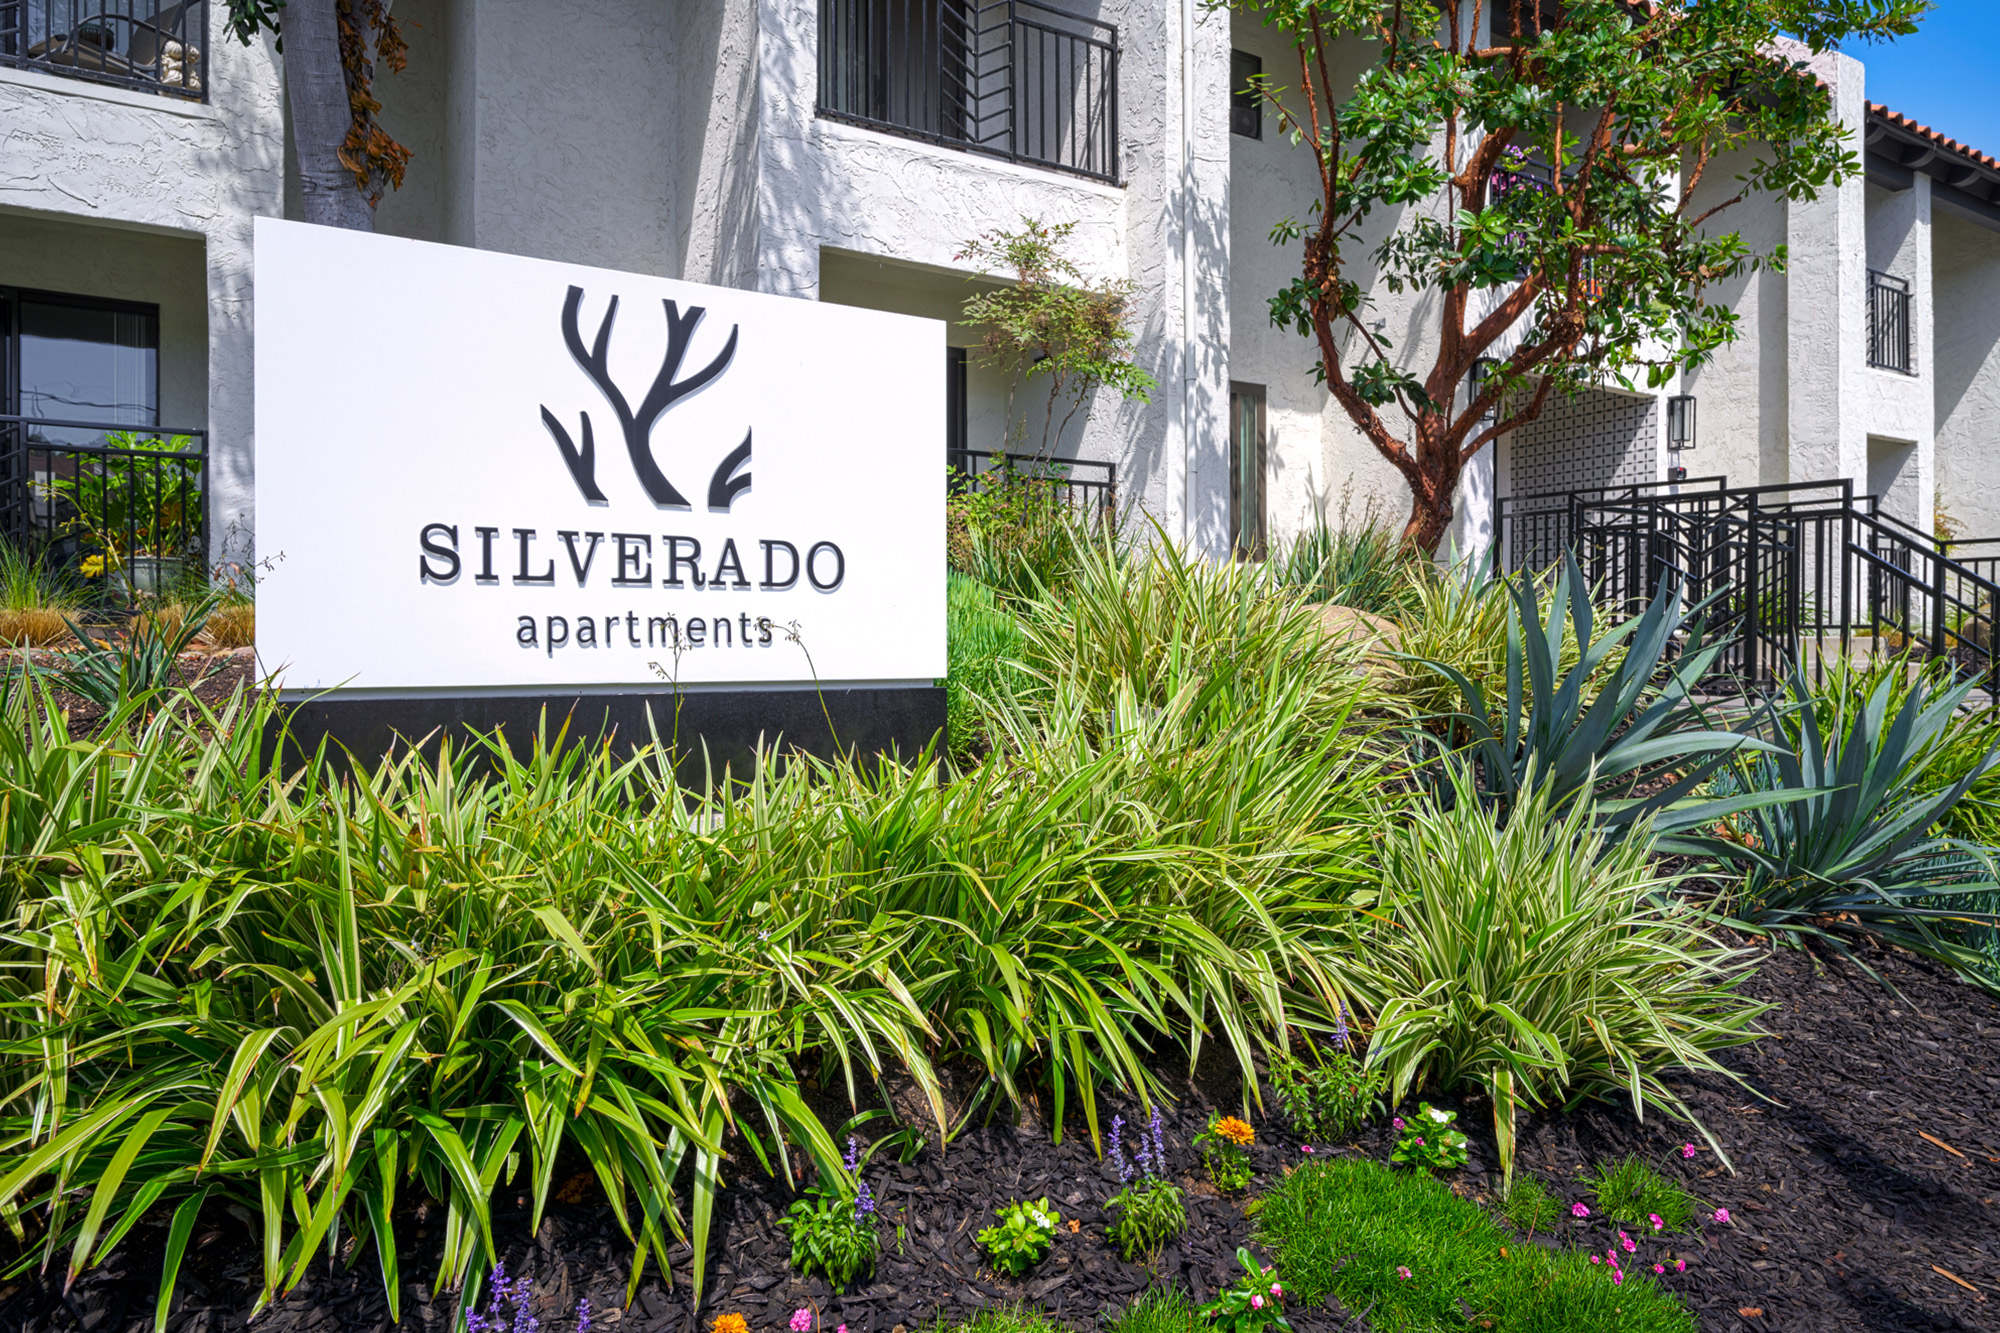 This image displays entrance marker photo of Silverado Apartments